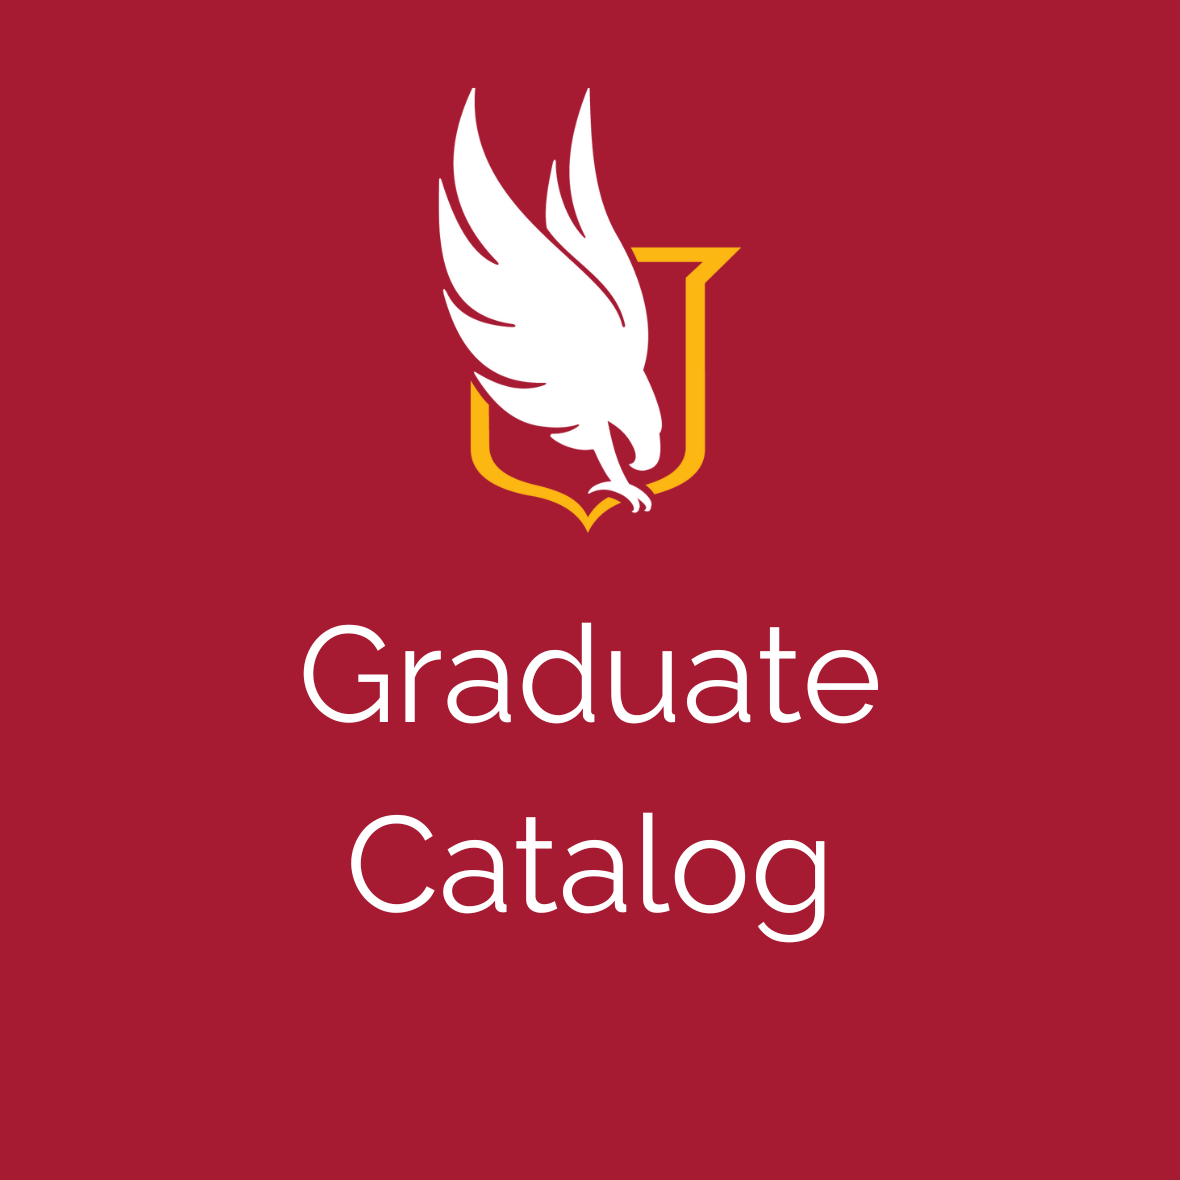 Winthrop Logo and Graduate Catalog text